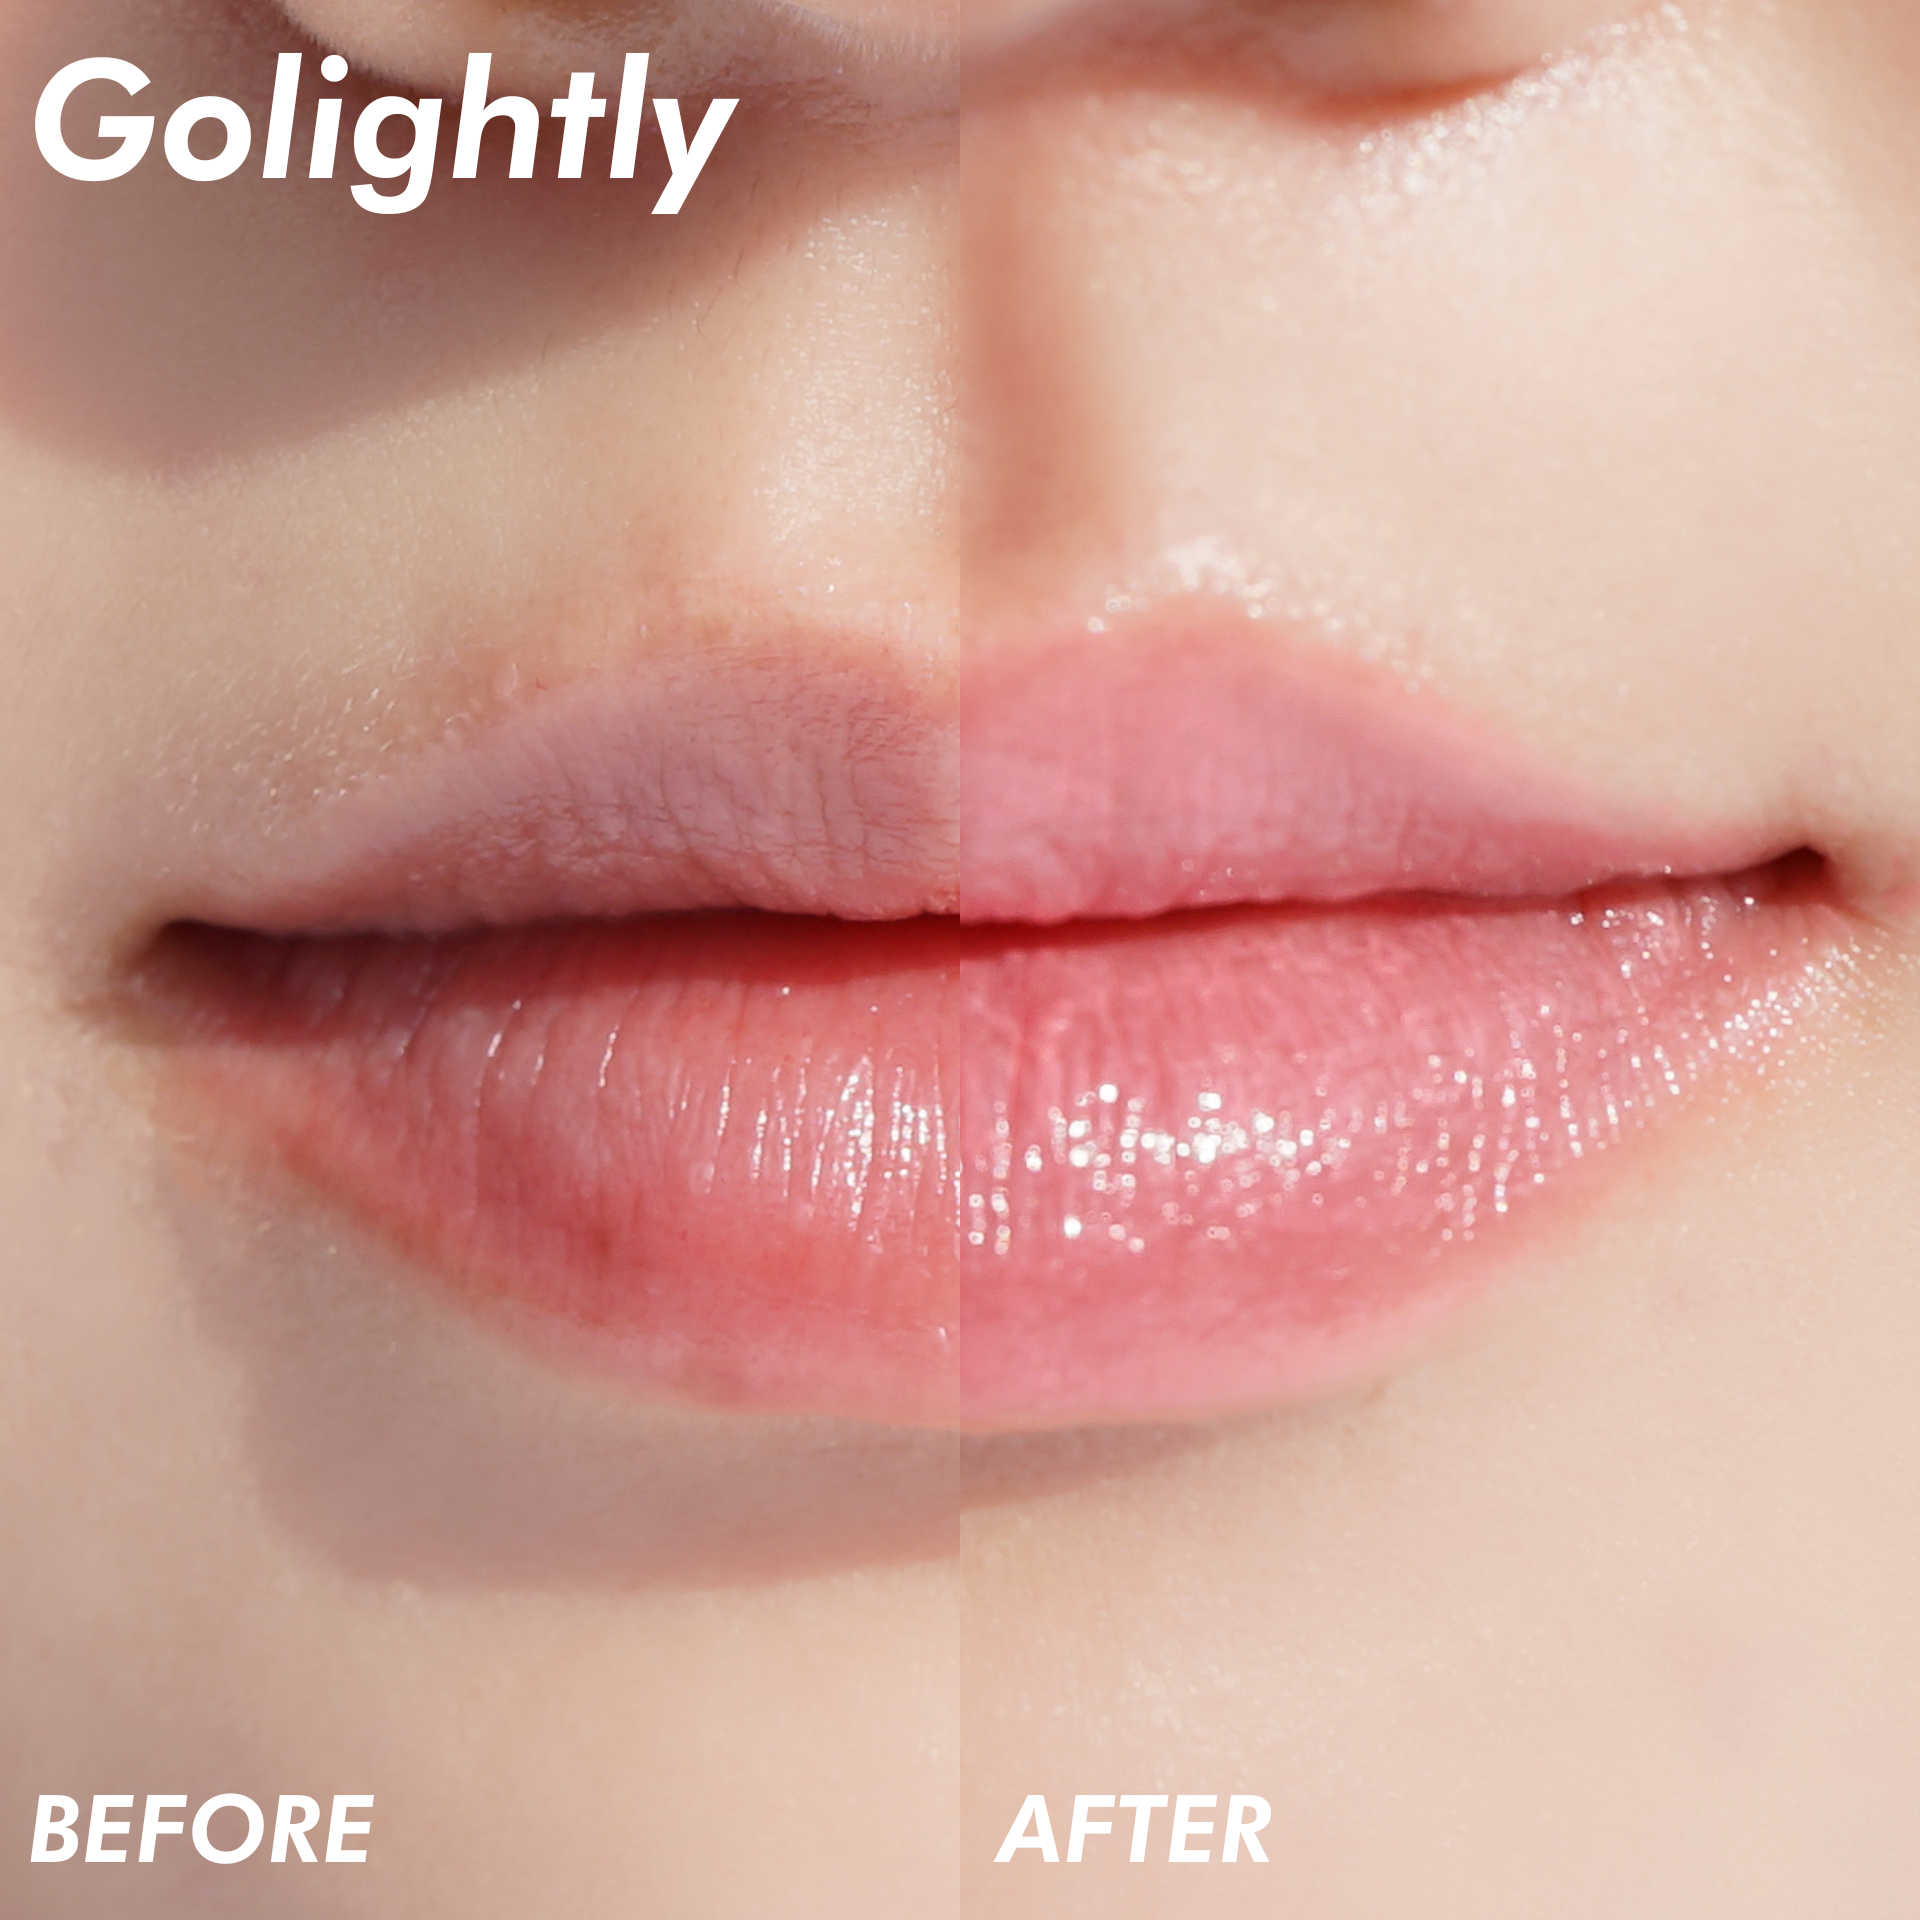 LIP LOCK Color Balm Hydrating Lipstick - Golightly